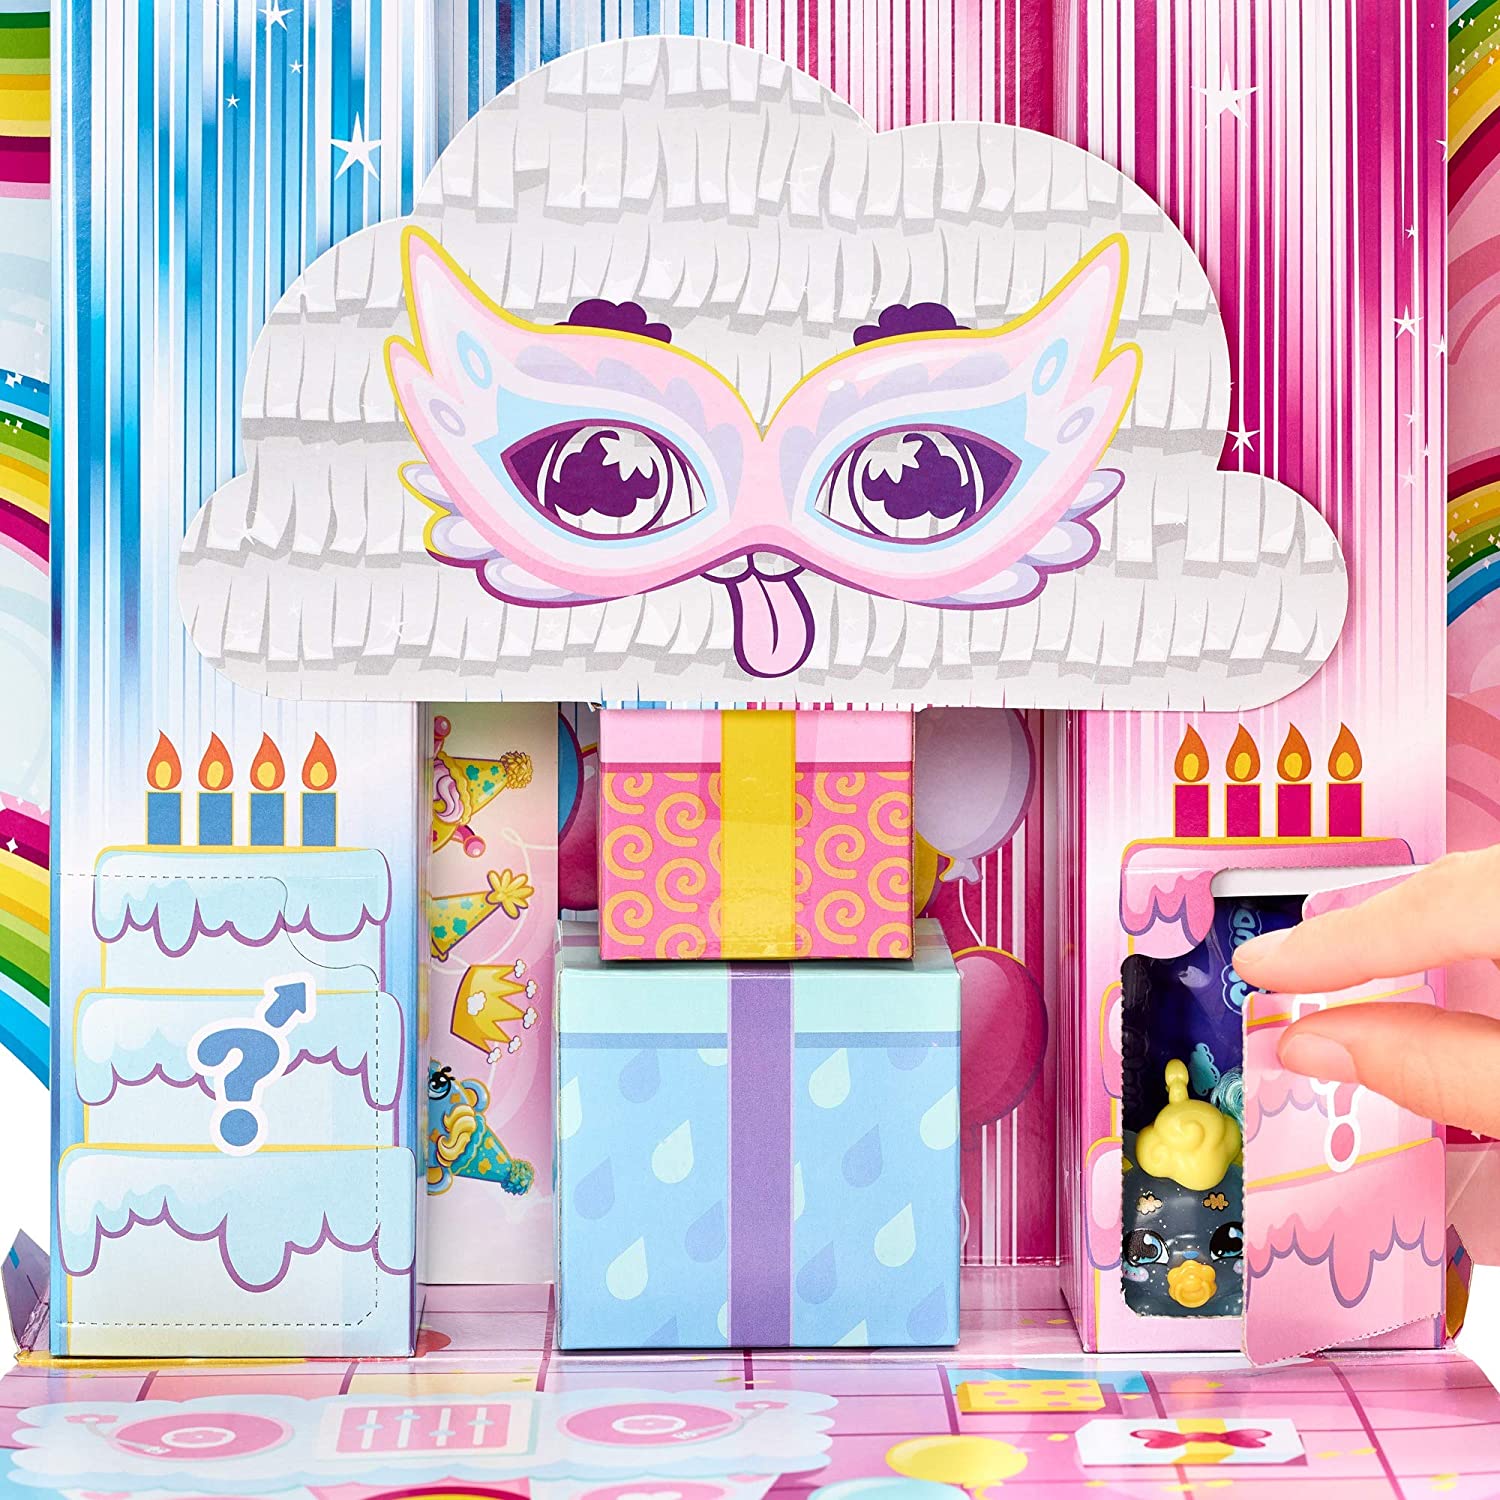 New toys 2020: Mattel Cloudees pets - cloud themed surprise